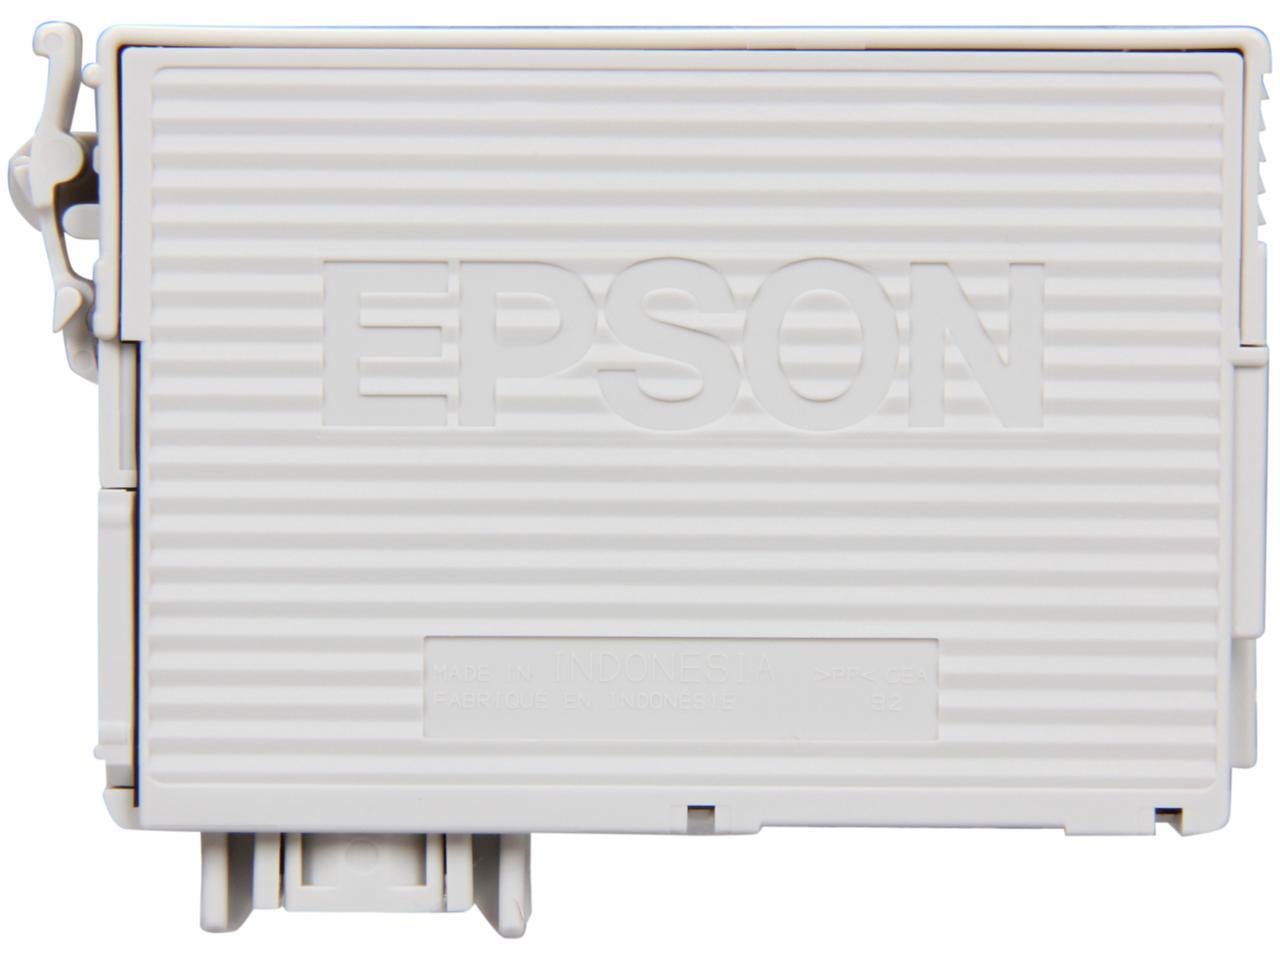 EPSON 69 (T069120) Ink Cartridge For Epson Stylus CX5000, CX6000 Black